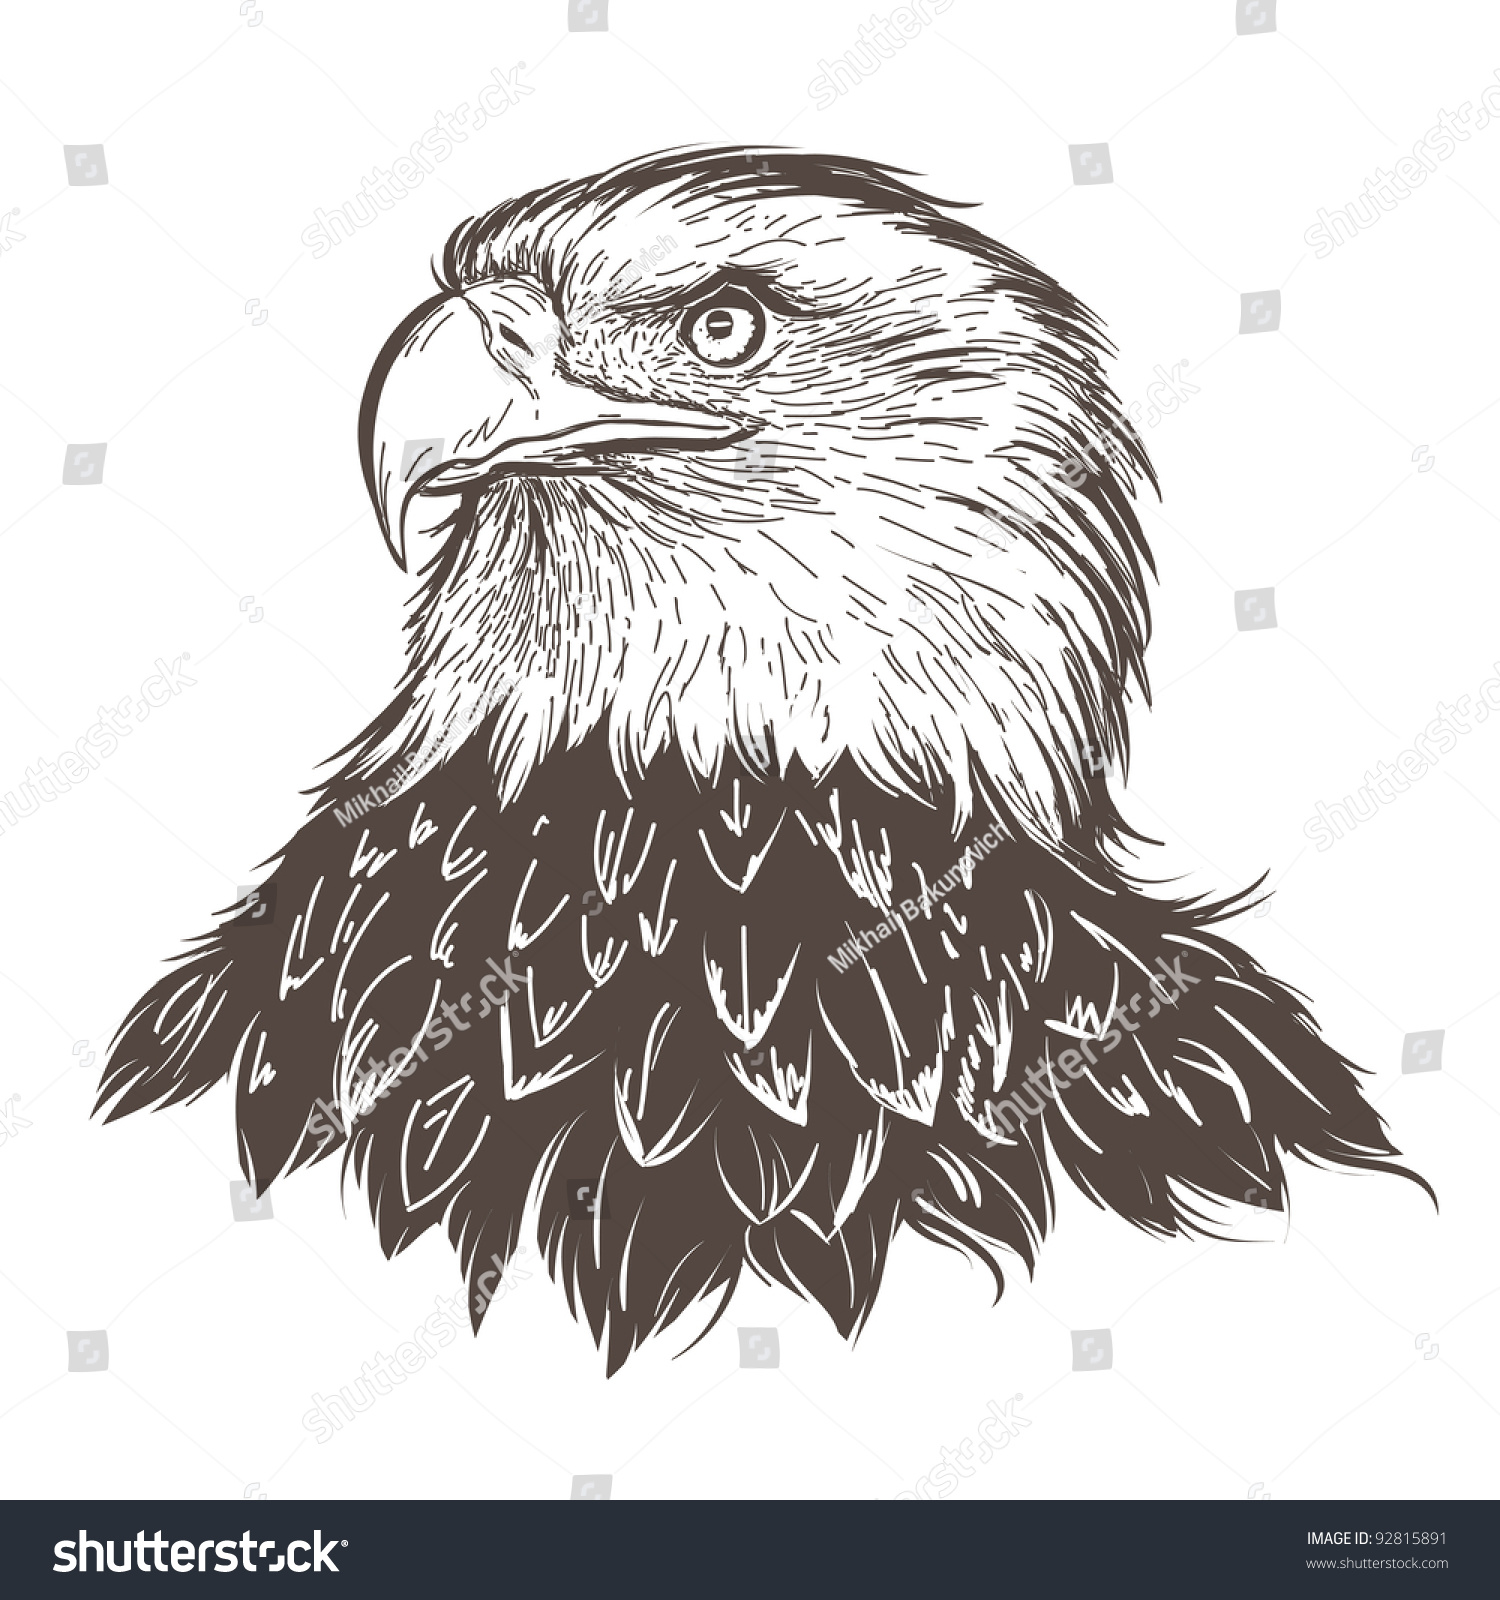 Eagle Stock Vector Illustration 92815891 : Shutterstock